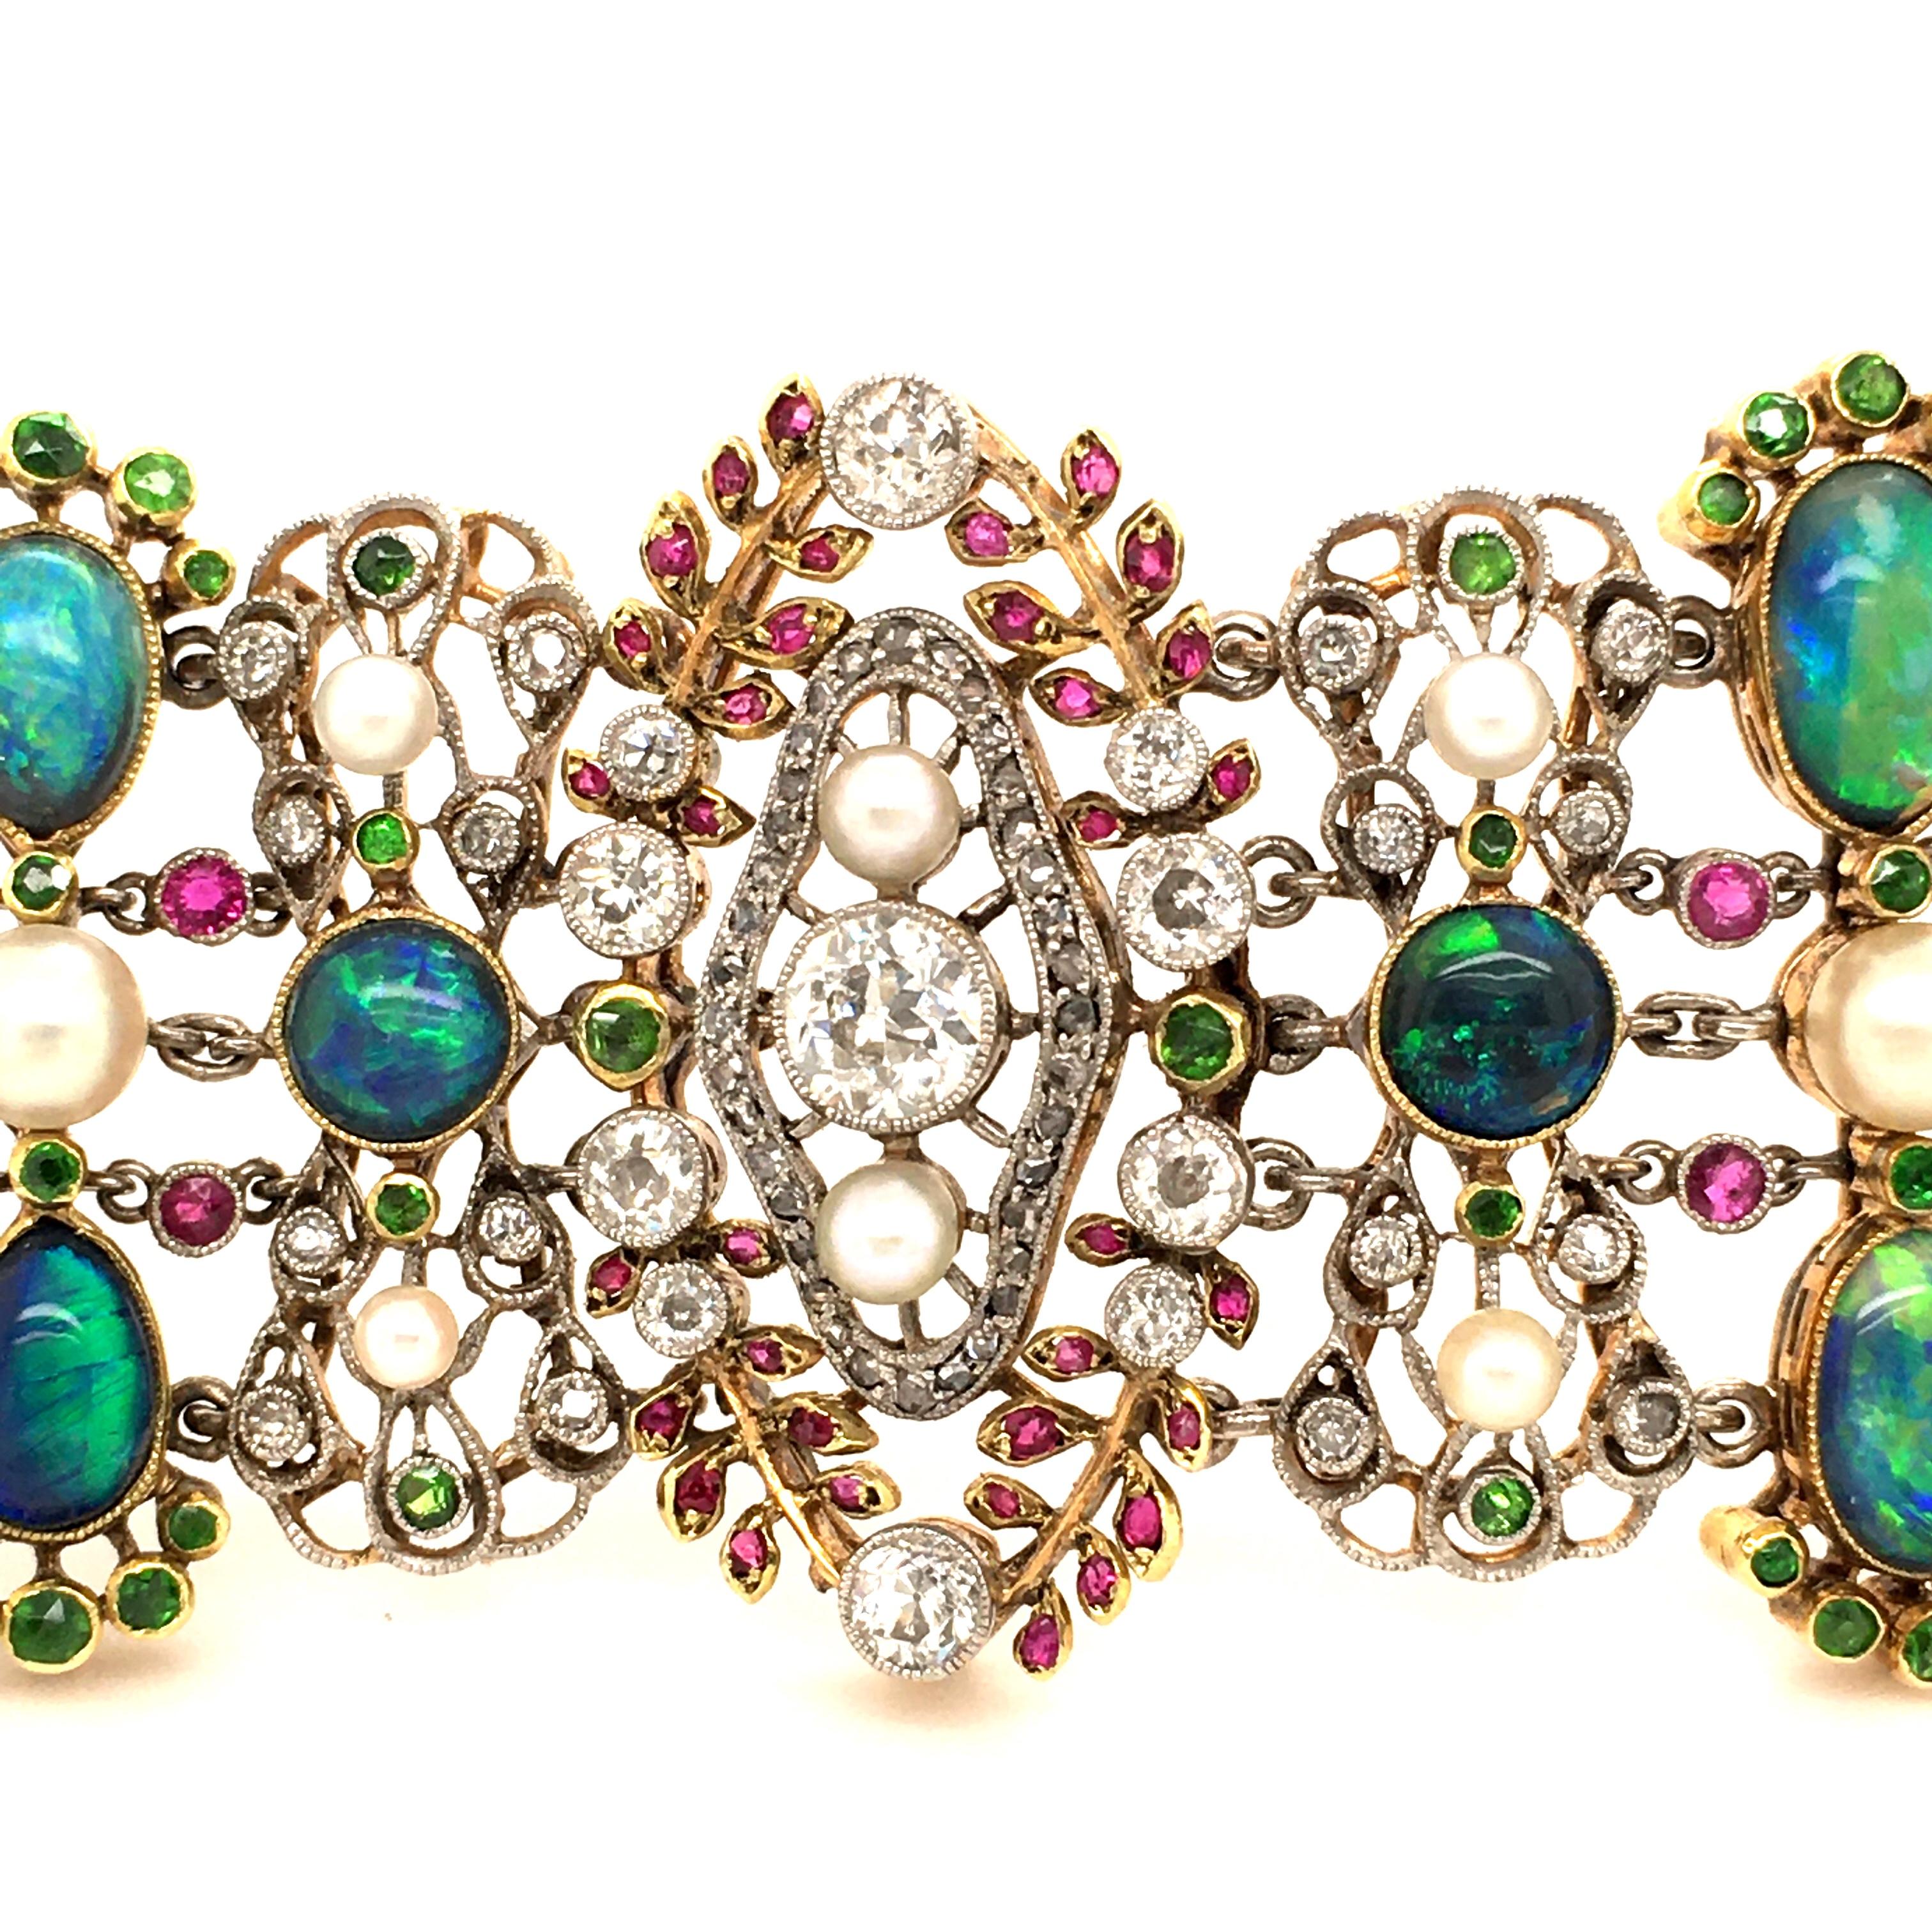 Belle Époque/Art Nouveau Bracelet with Opals, Pearls and Diamonds by Rothmuller For Sale 6